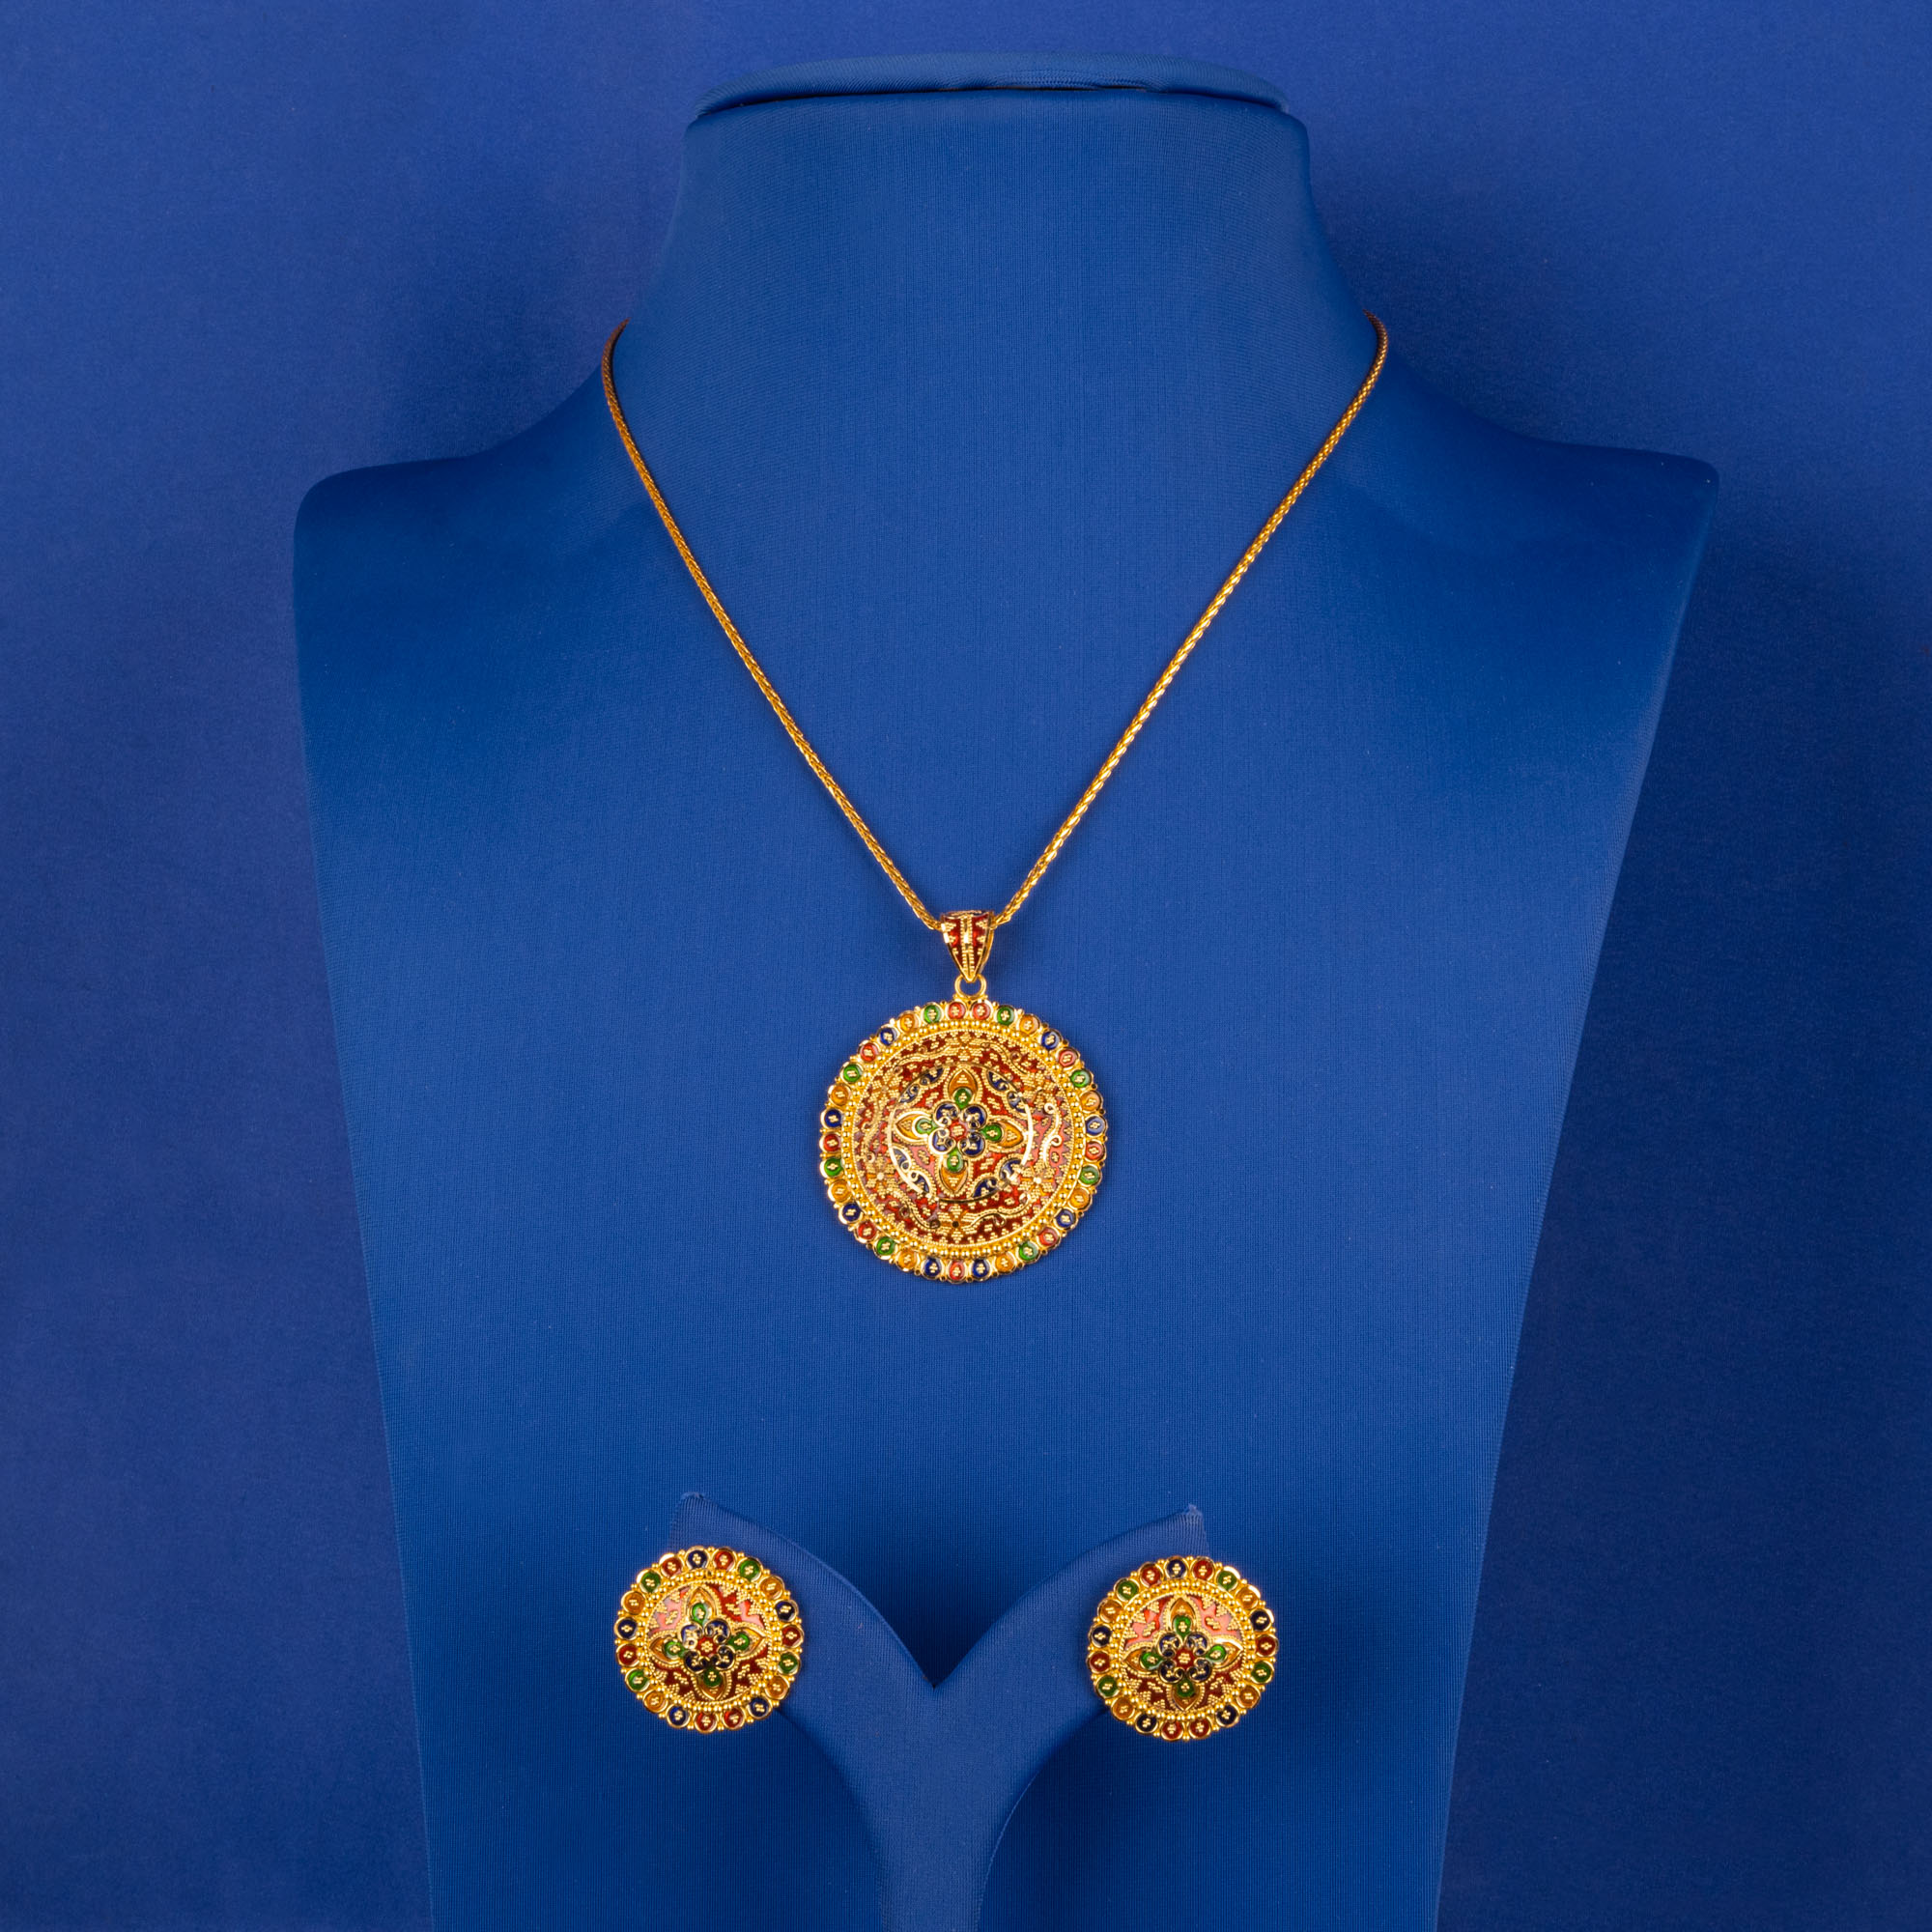 Luminous Delight: Handmade 22K Gold Pendant and Earrings Set (chain not included)